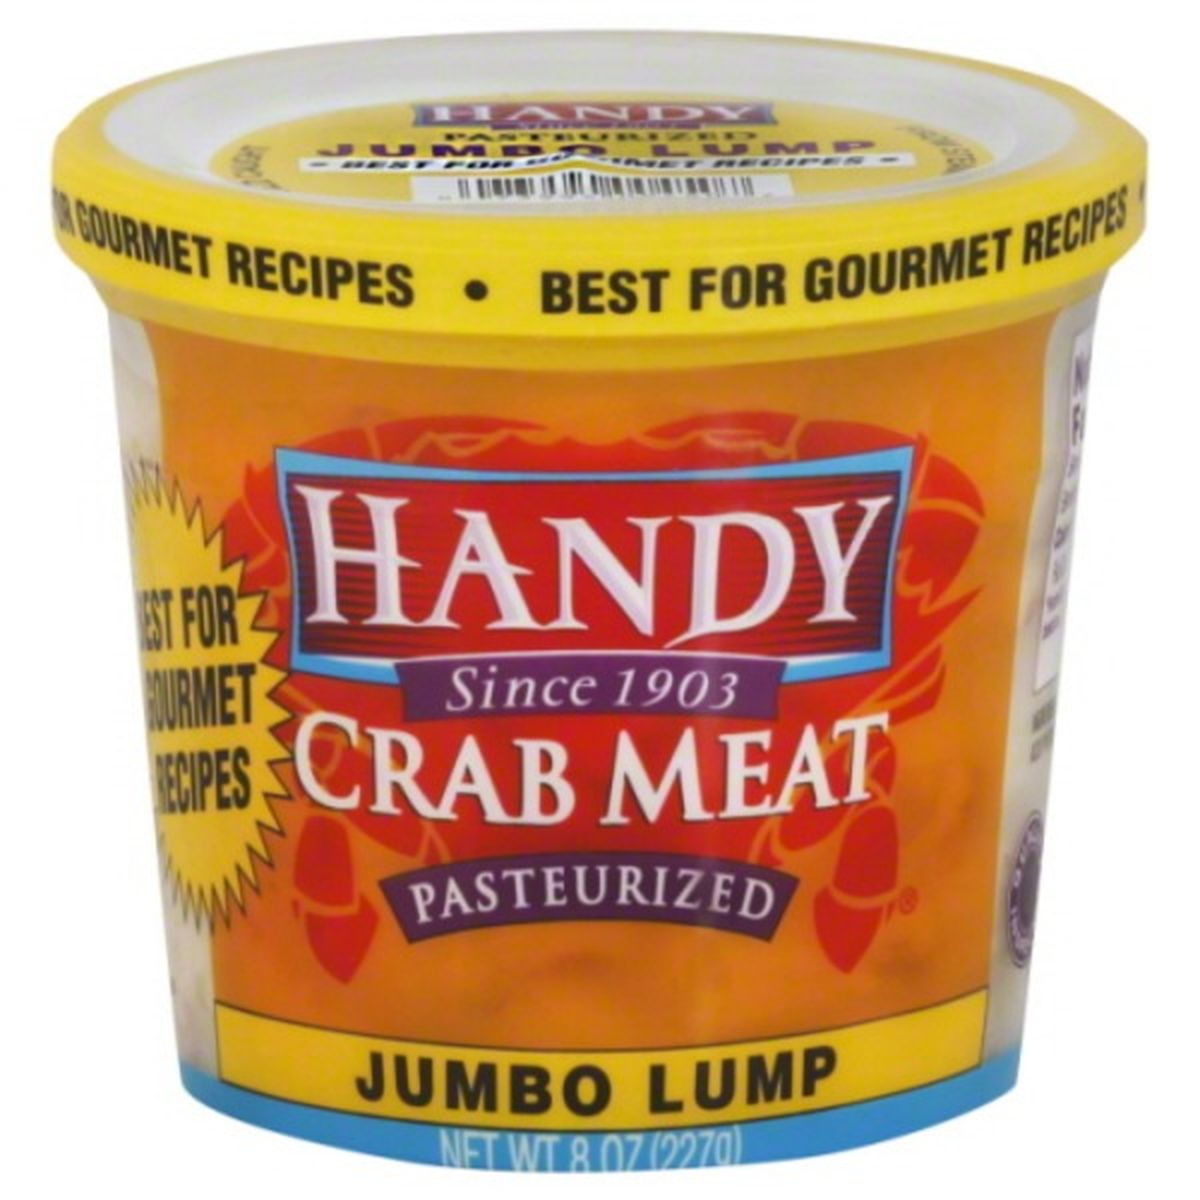 Calories in Handy Crab Meat, Jumbo Lump